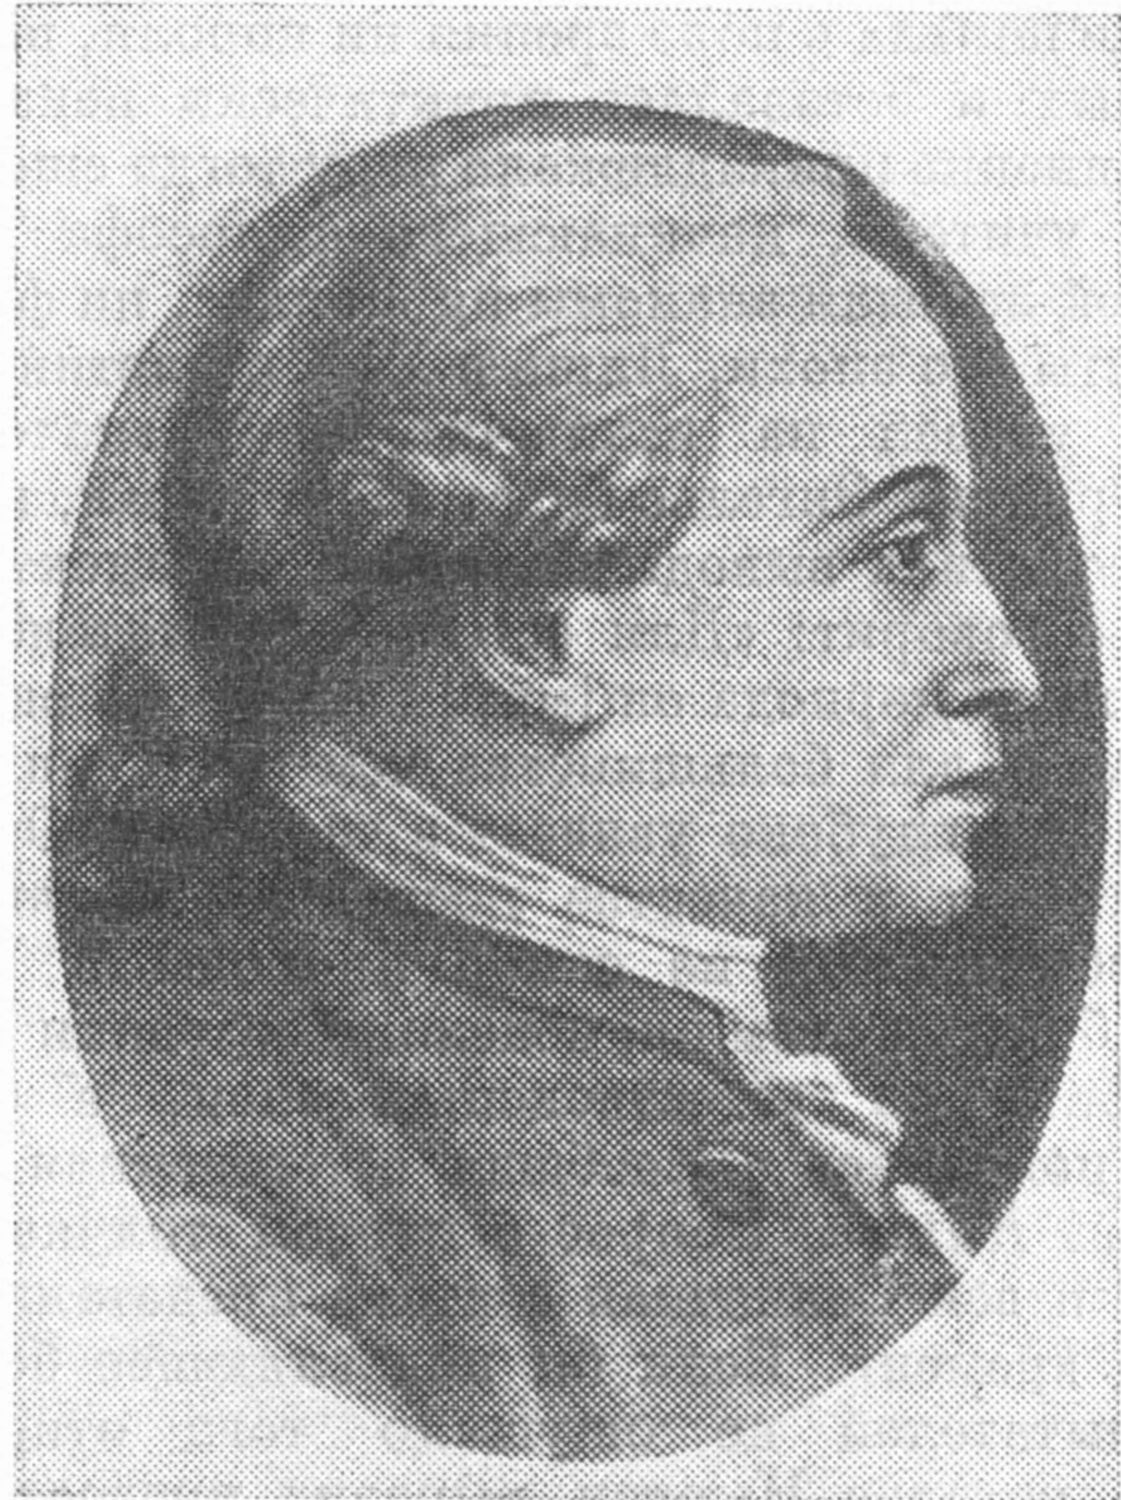 Иммануил Кант (1724—1804)